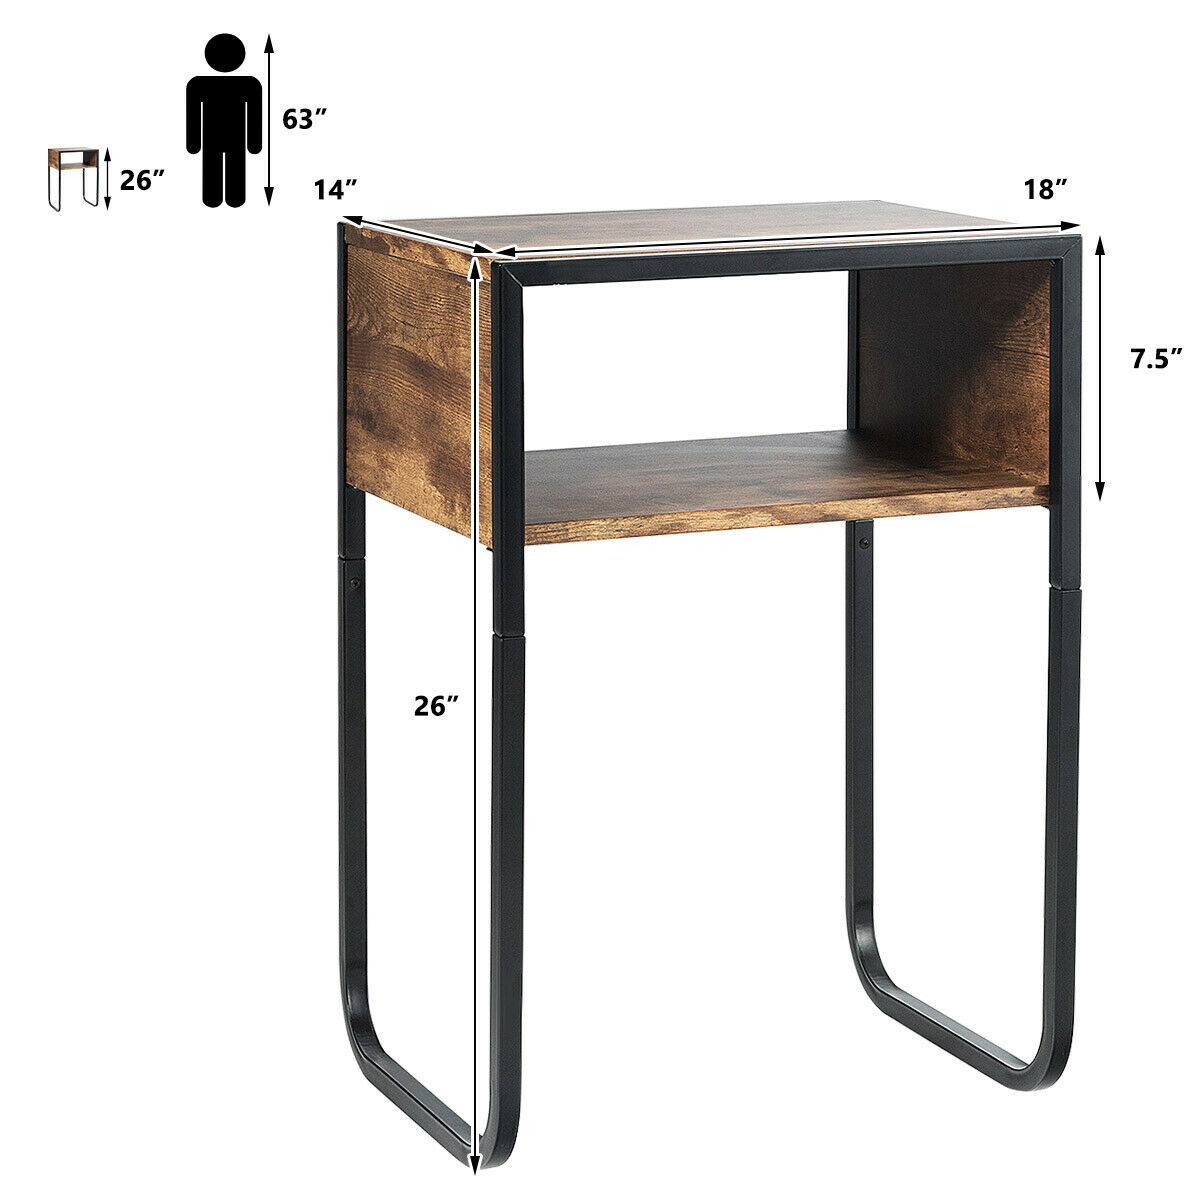 Costway Side Table Industrial Coffee Table w/Metal Frame Rustic End Table Nightstand